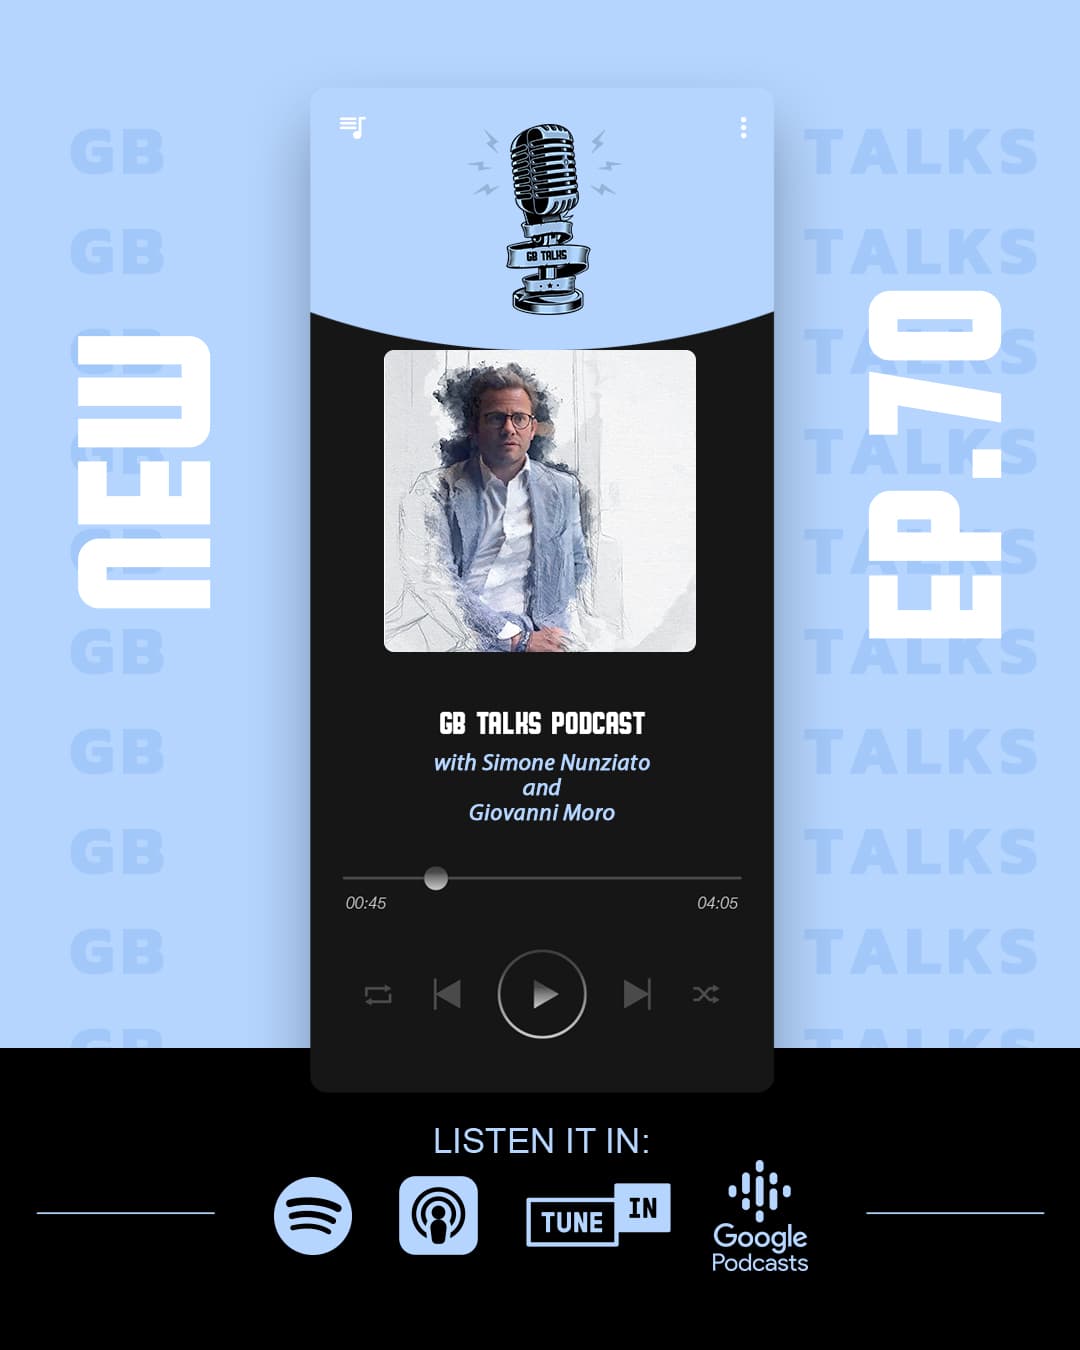 GB Talks Podcast Episode 70